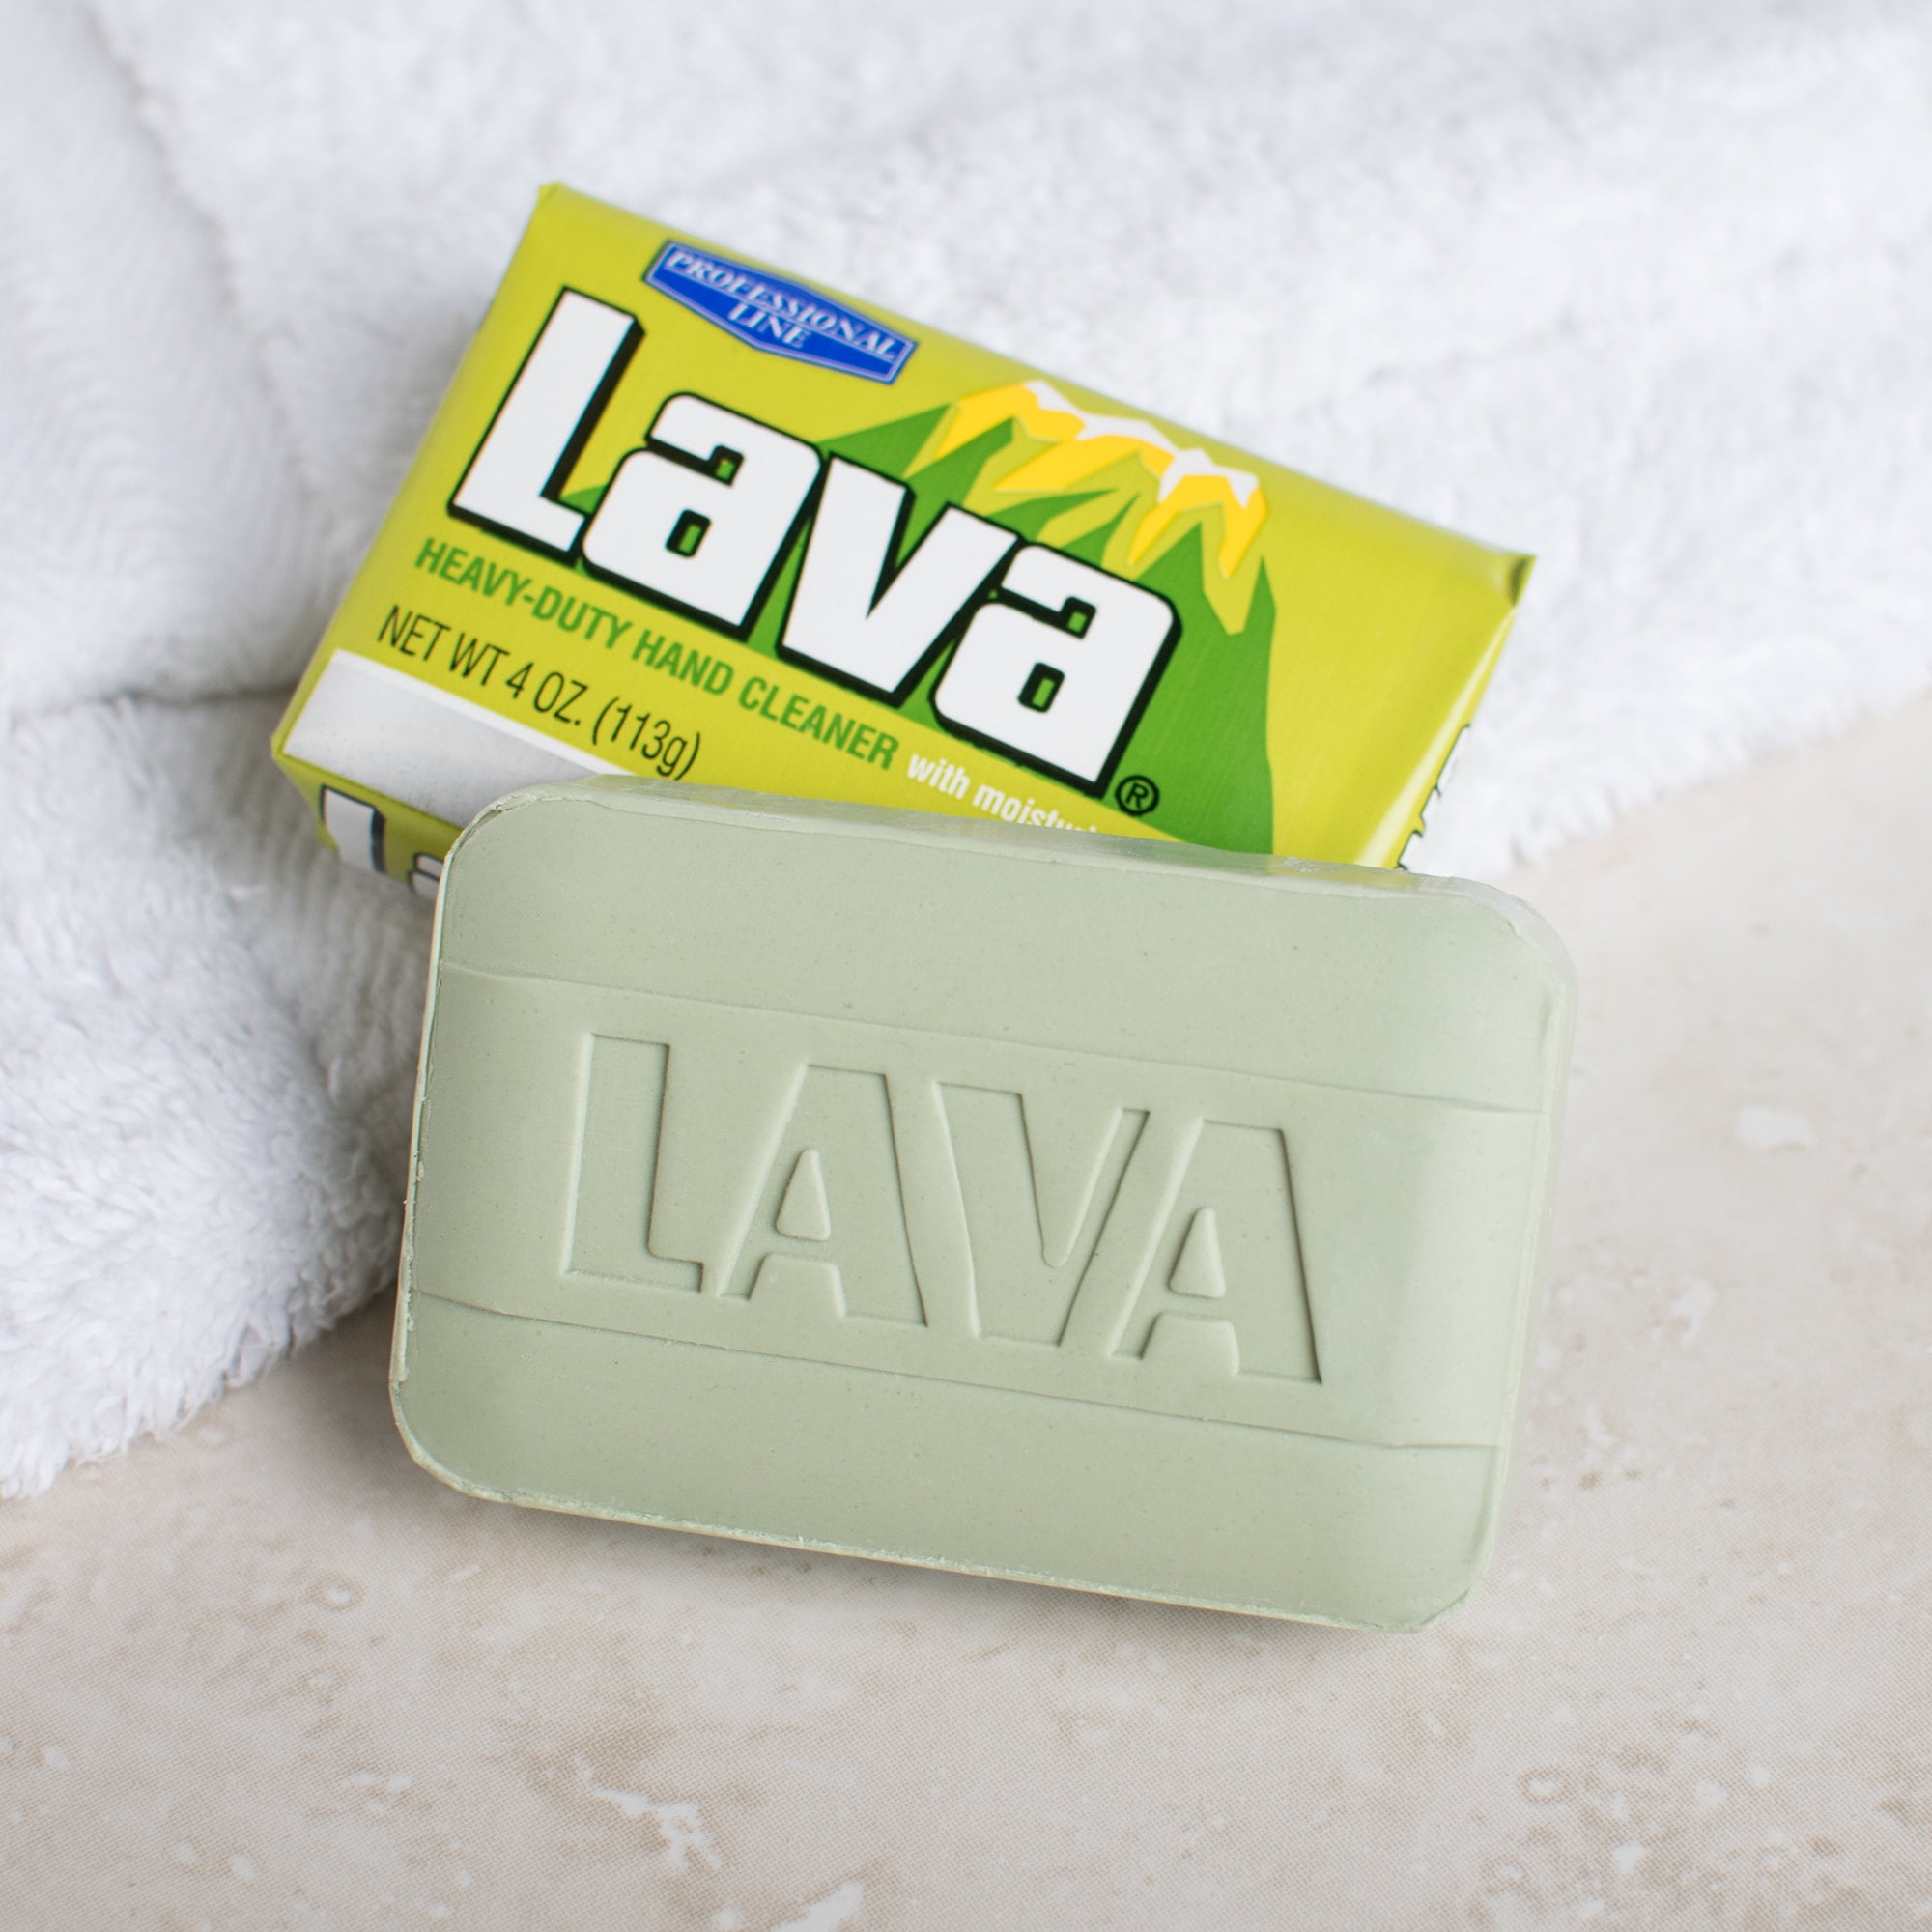 Lava Soap - Find Lava Soap at your local Walmart in the